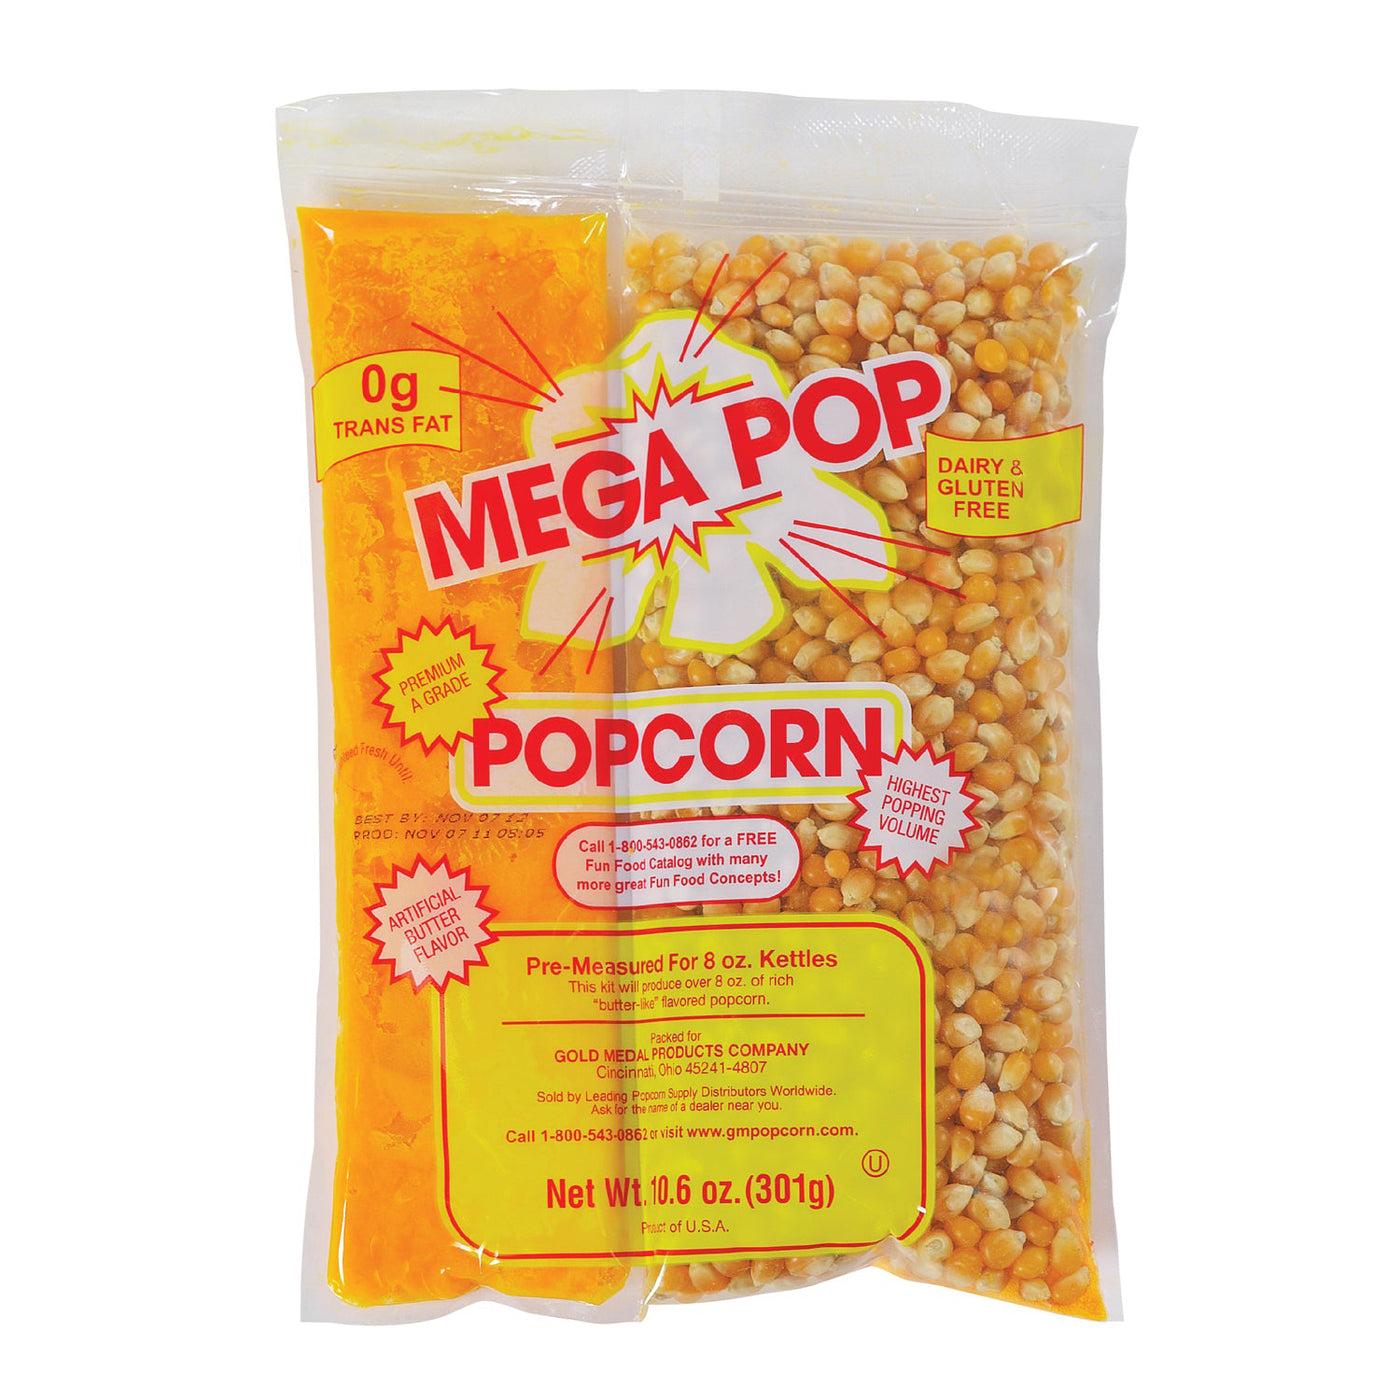 Popcorn Equipment Accessories & Supplies Starter Package for a 12-oz.  Popcorn Machine